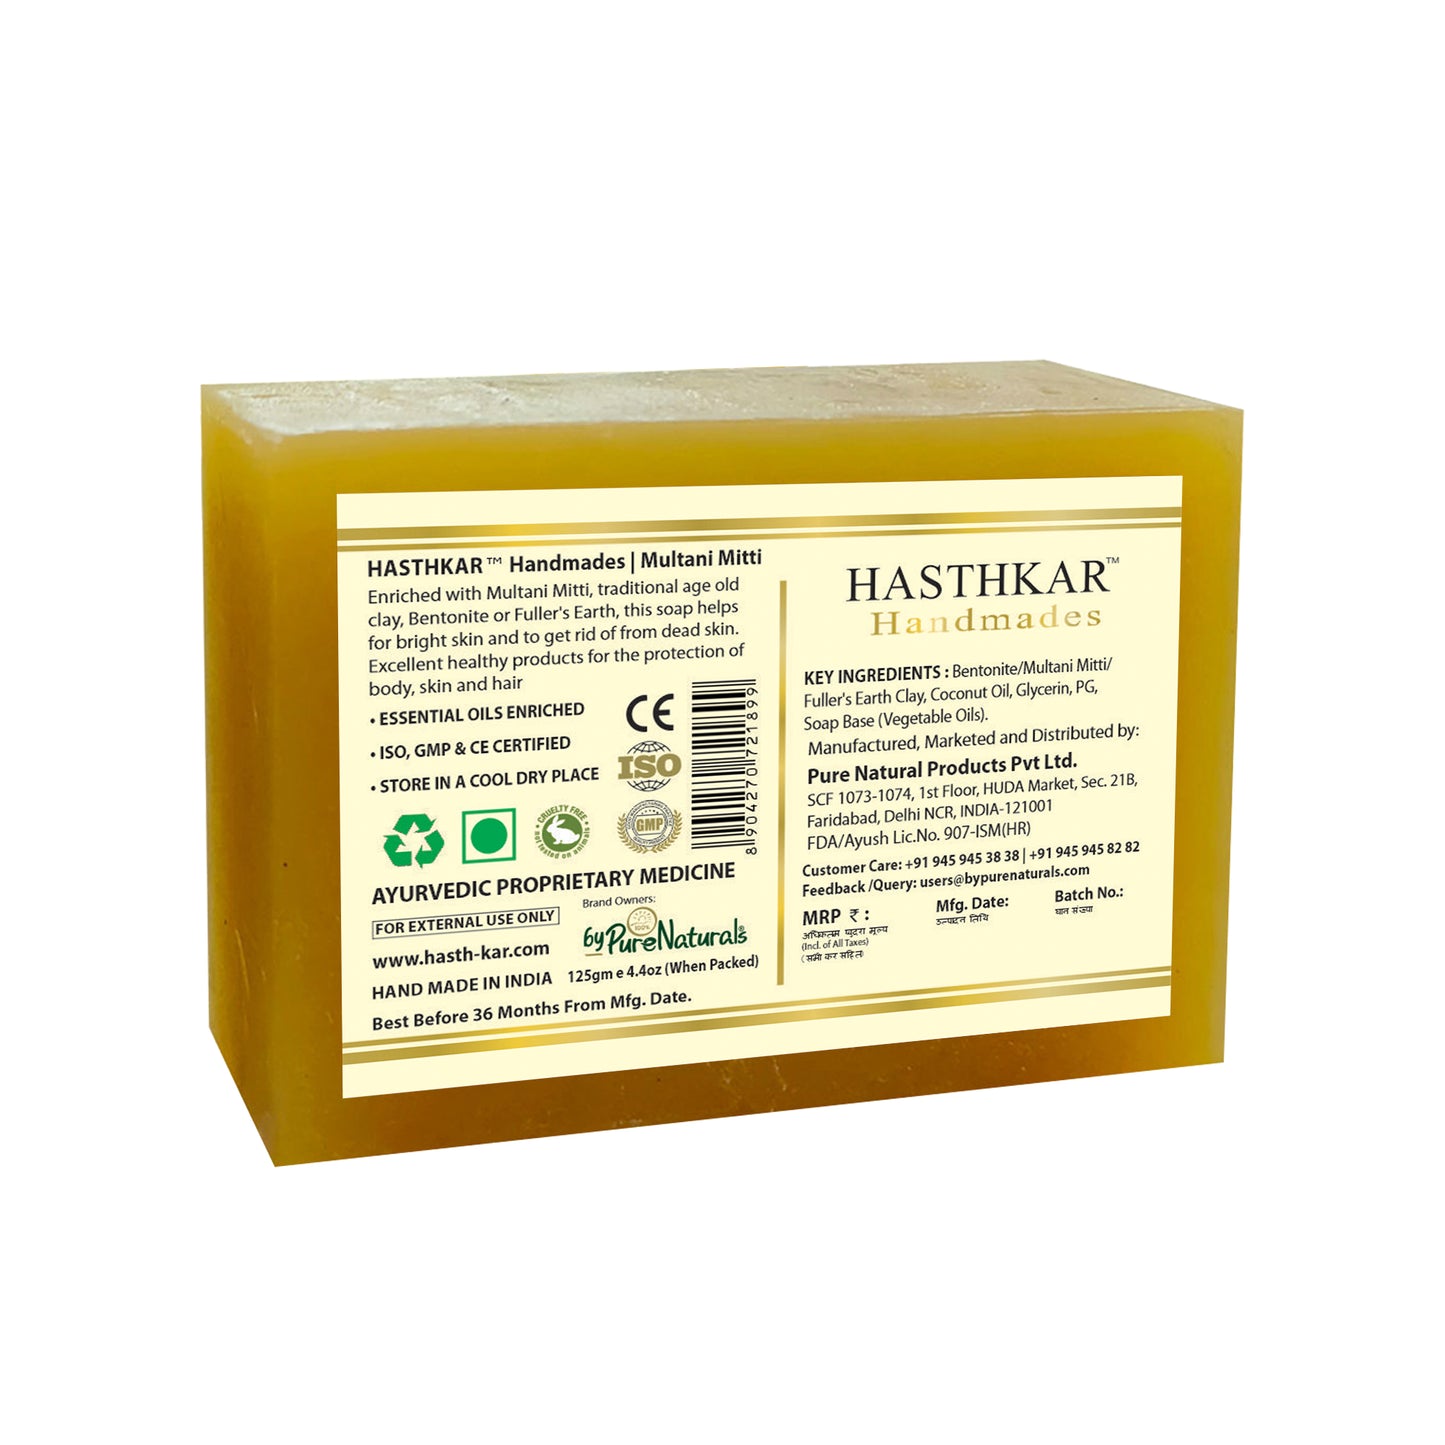 Hasthkar Handmades Glycerine Multani Mitti Soap 125gm Pack of 5